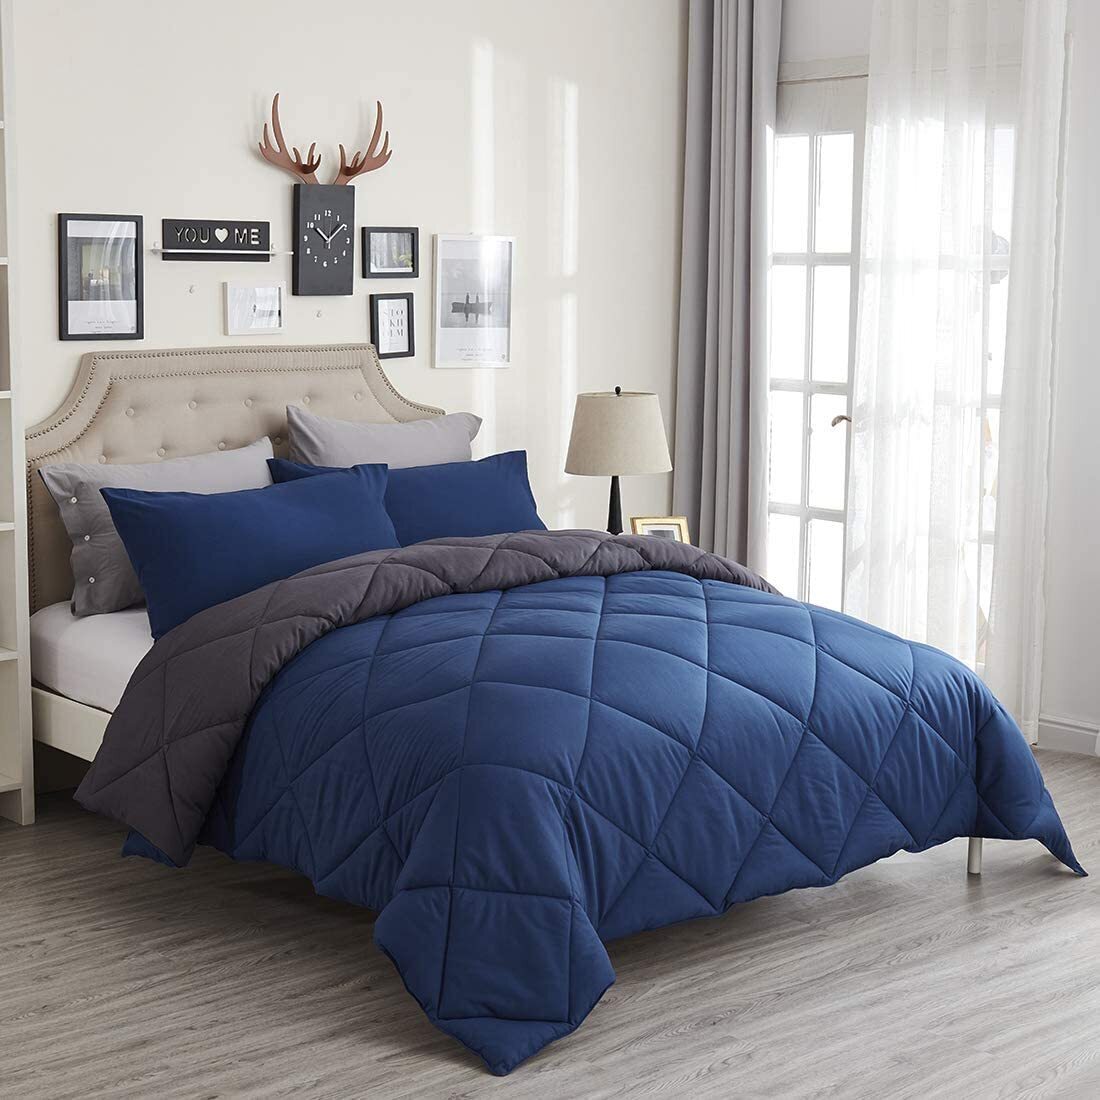 Luxury Comforter Complete Bedding Set